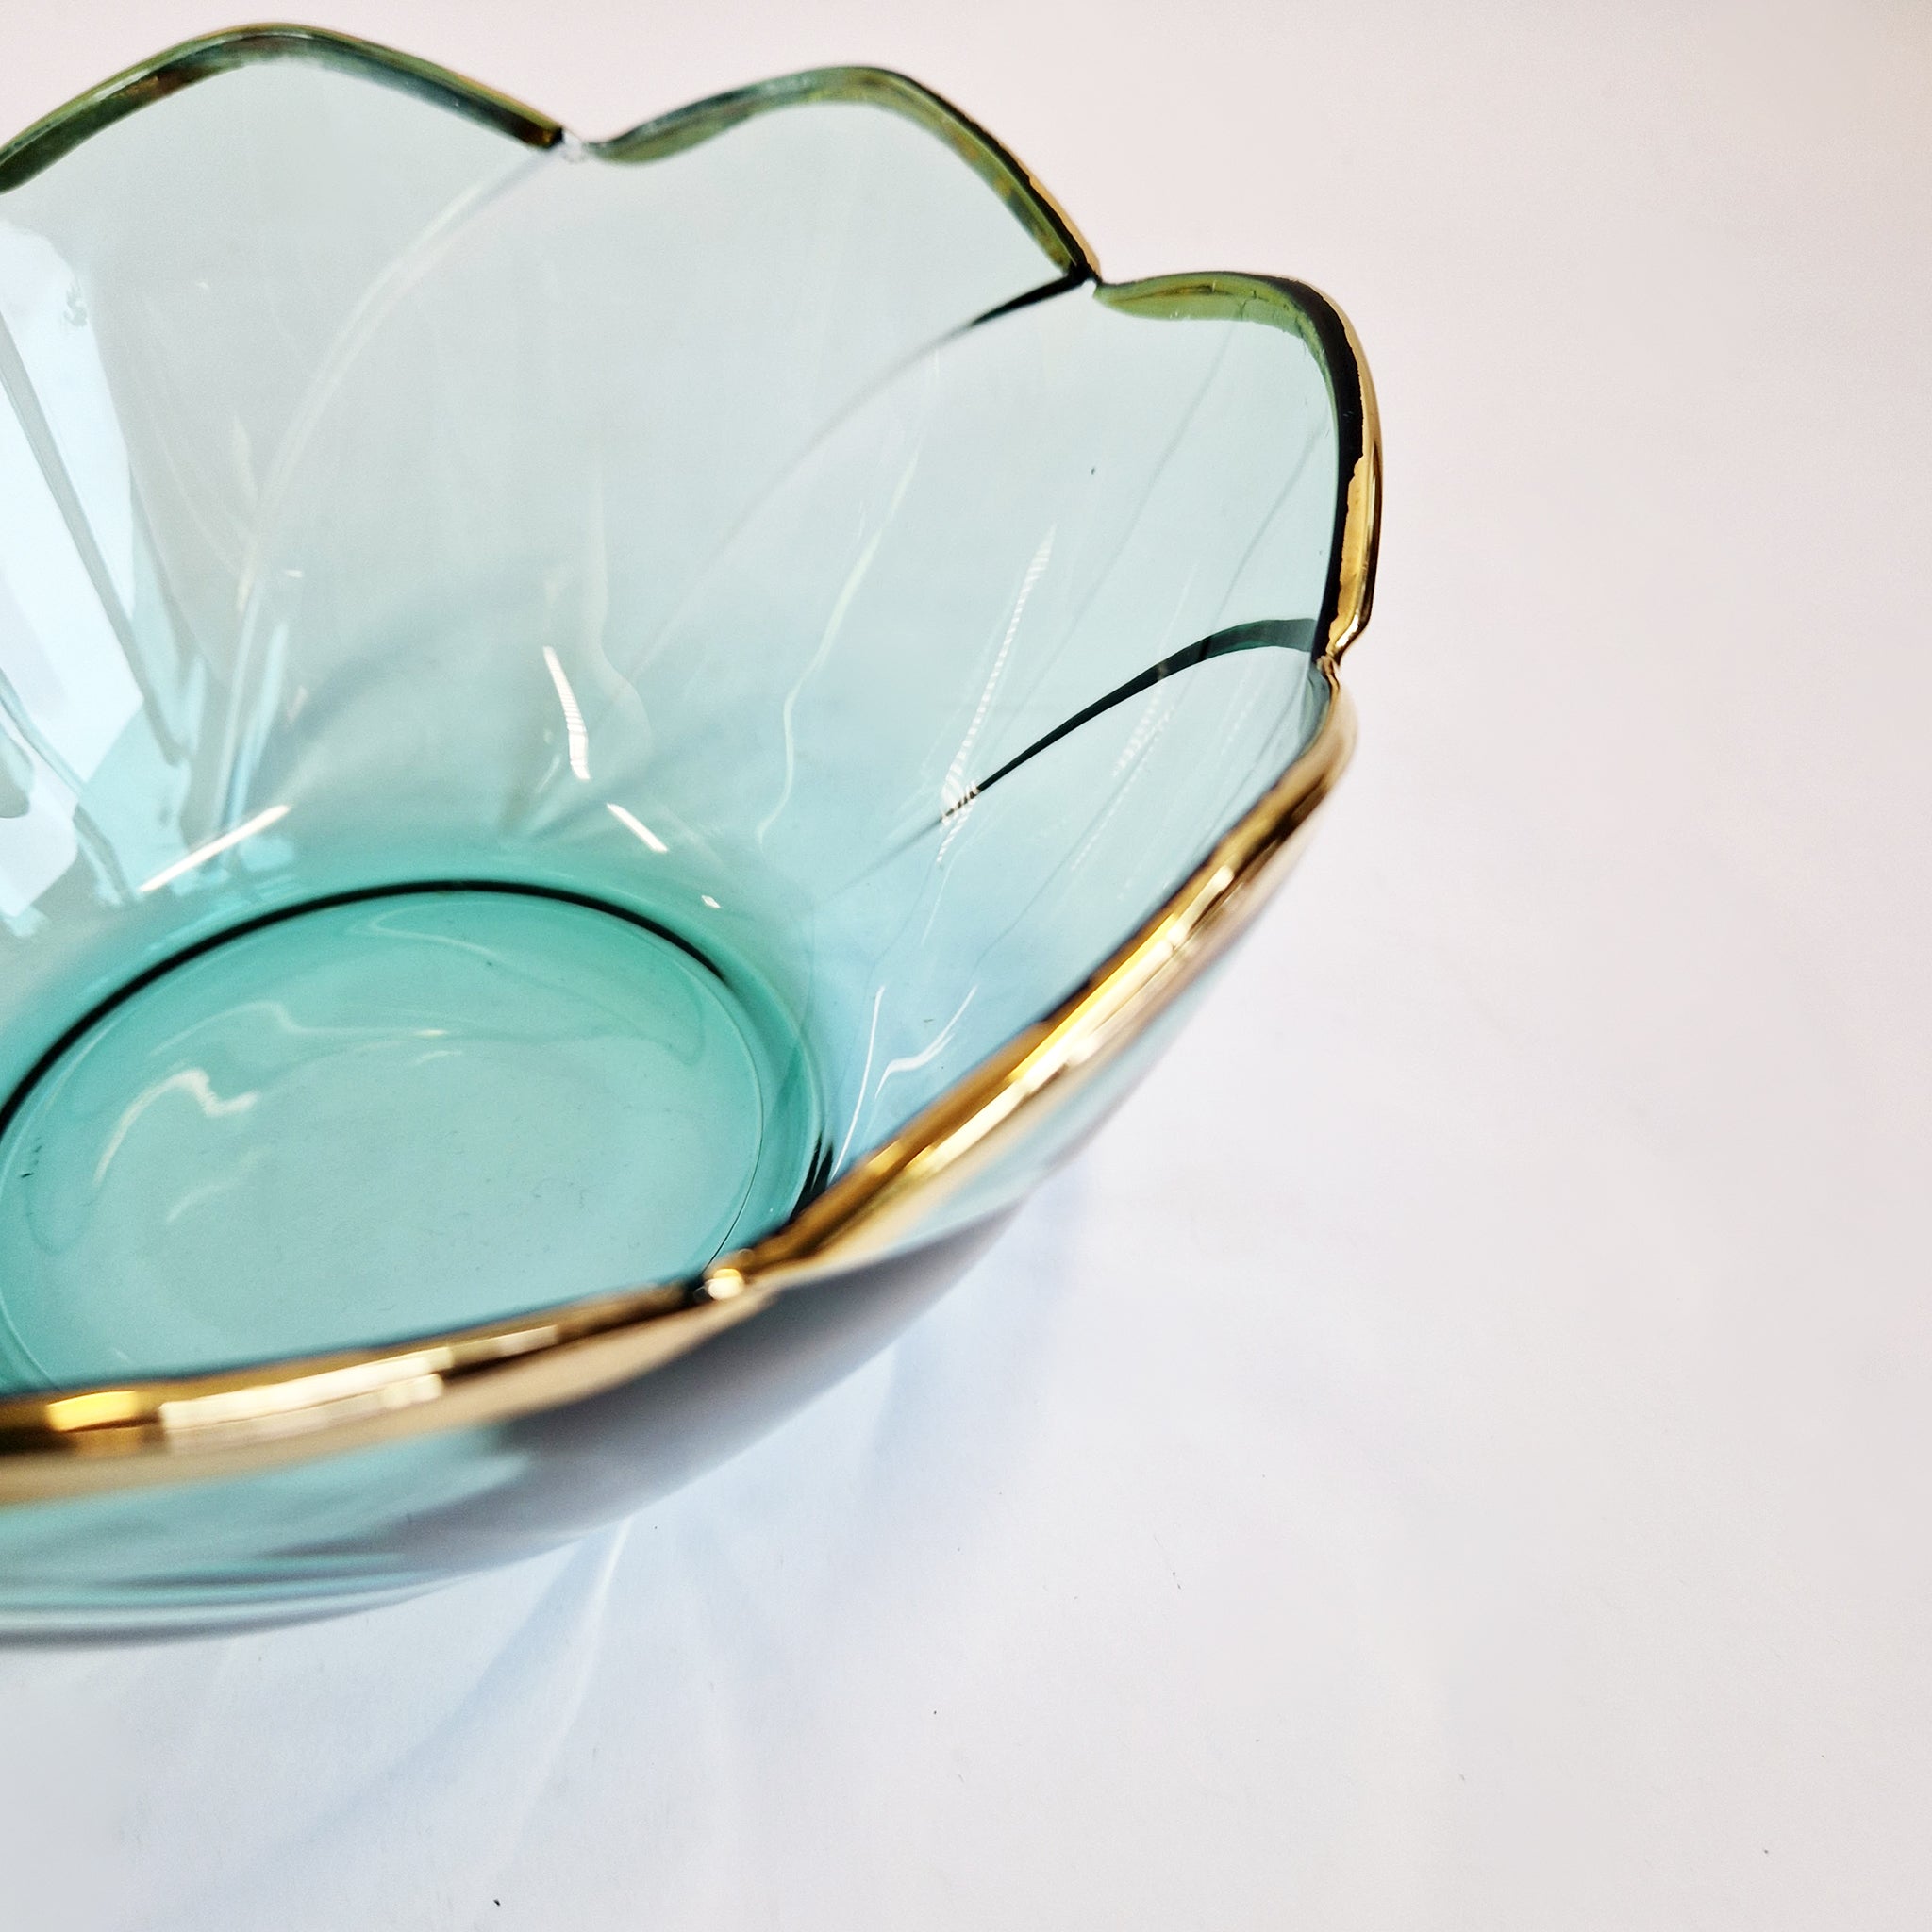 Vintage Italian glass bowl